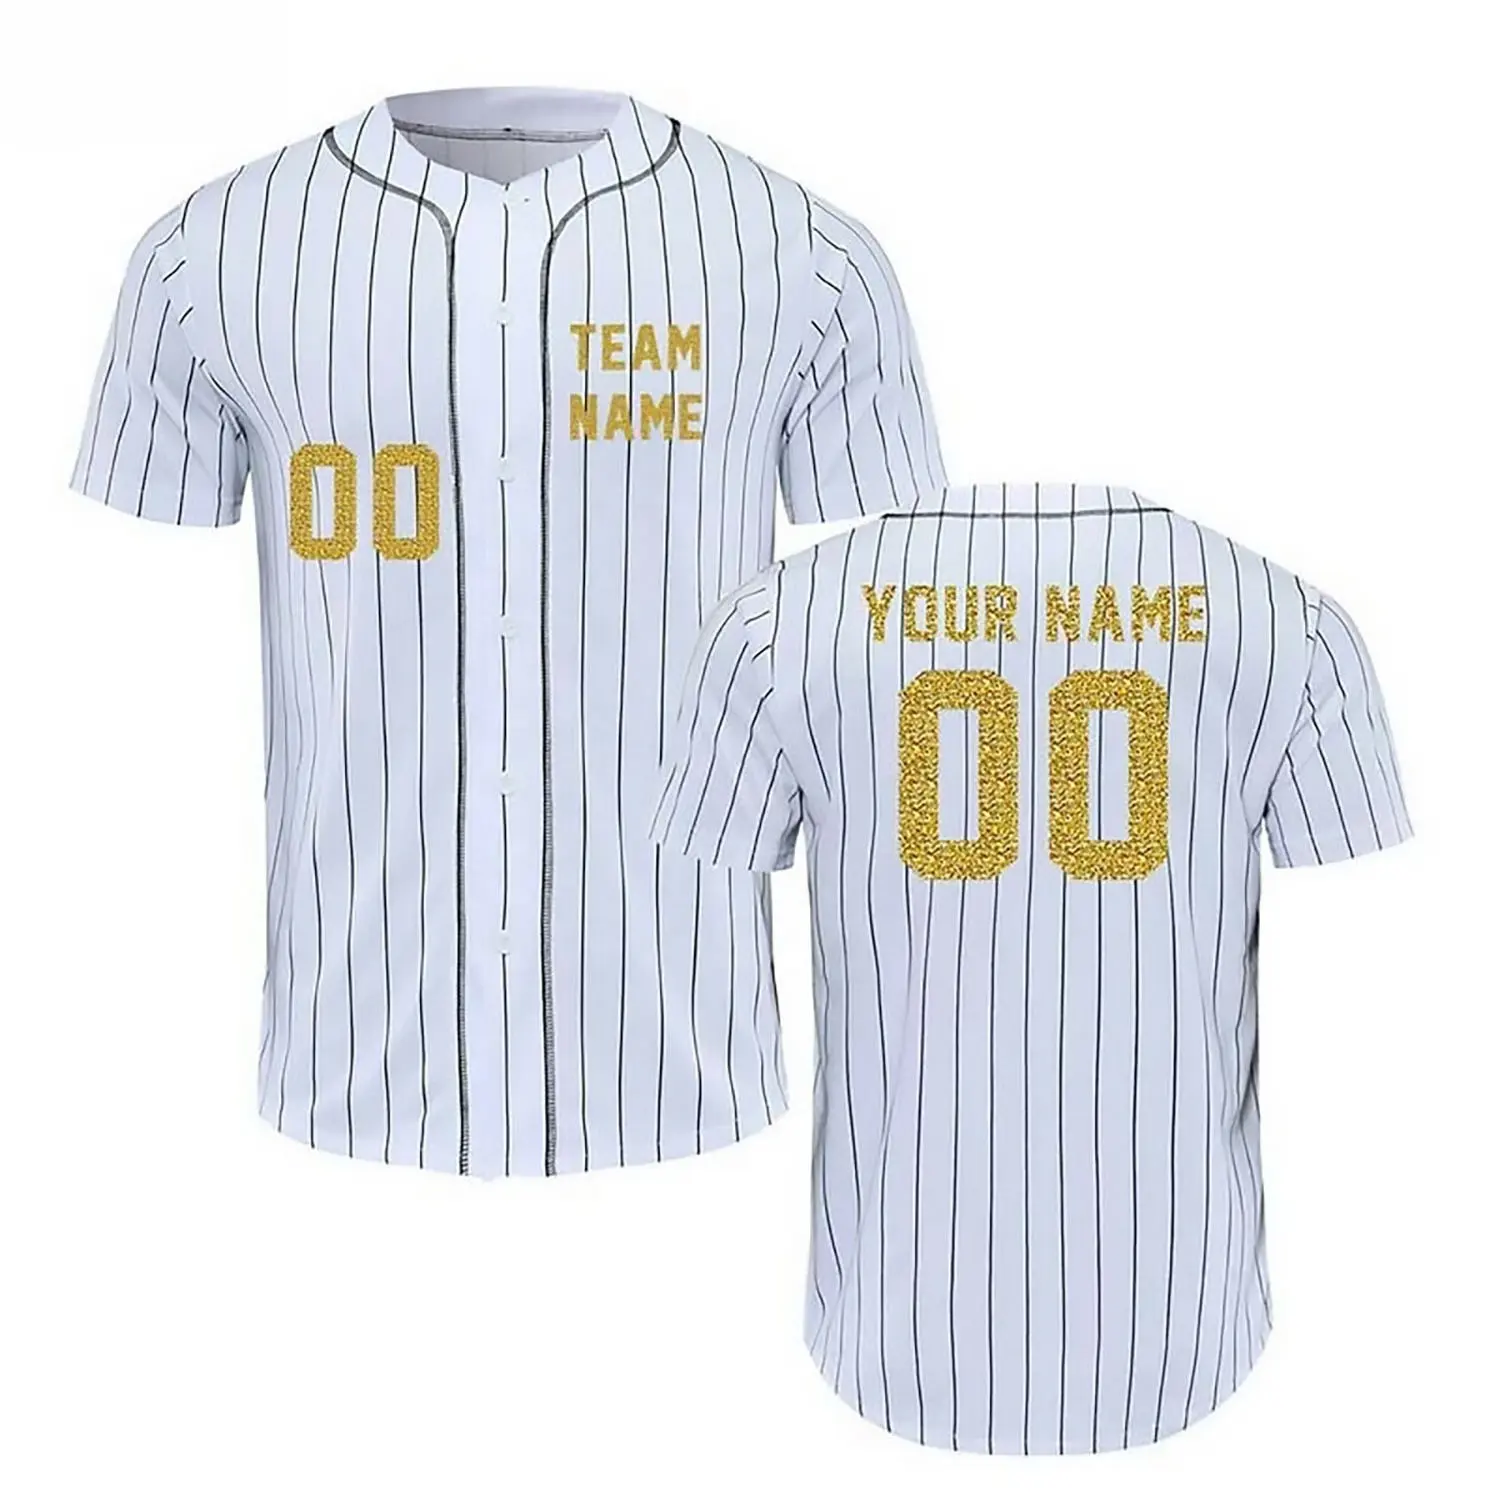 Hot Selling custom jersey baseball softball wear sports shirts men clothing sublimated baseball jersey